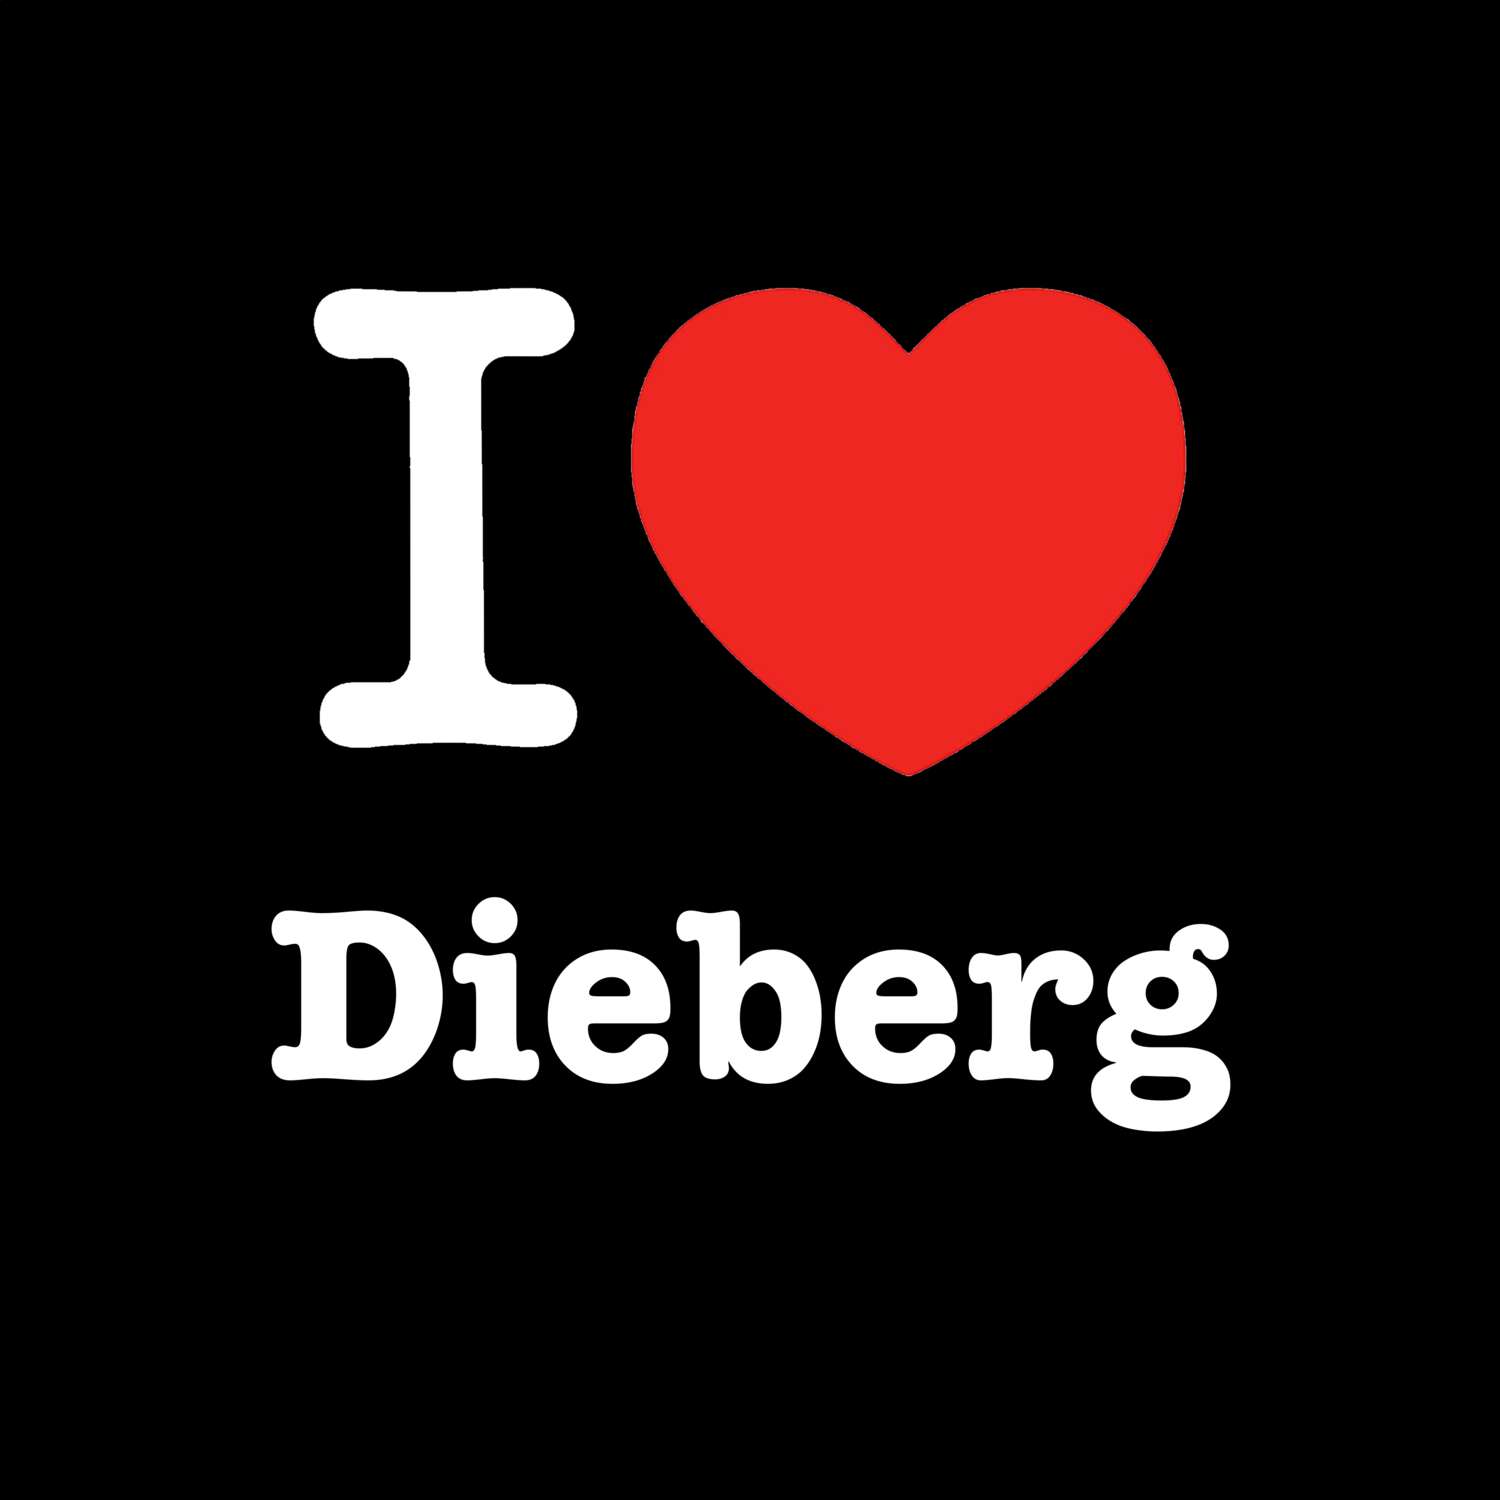 Dieberg T-Shirt »I love«